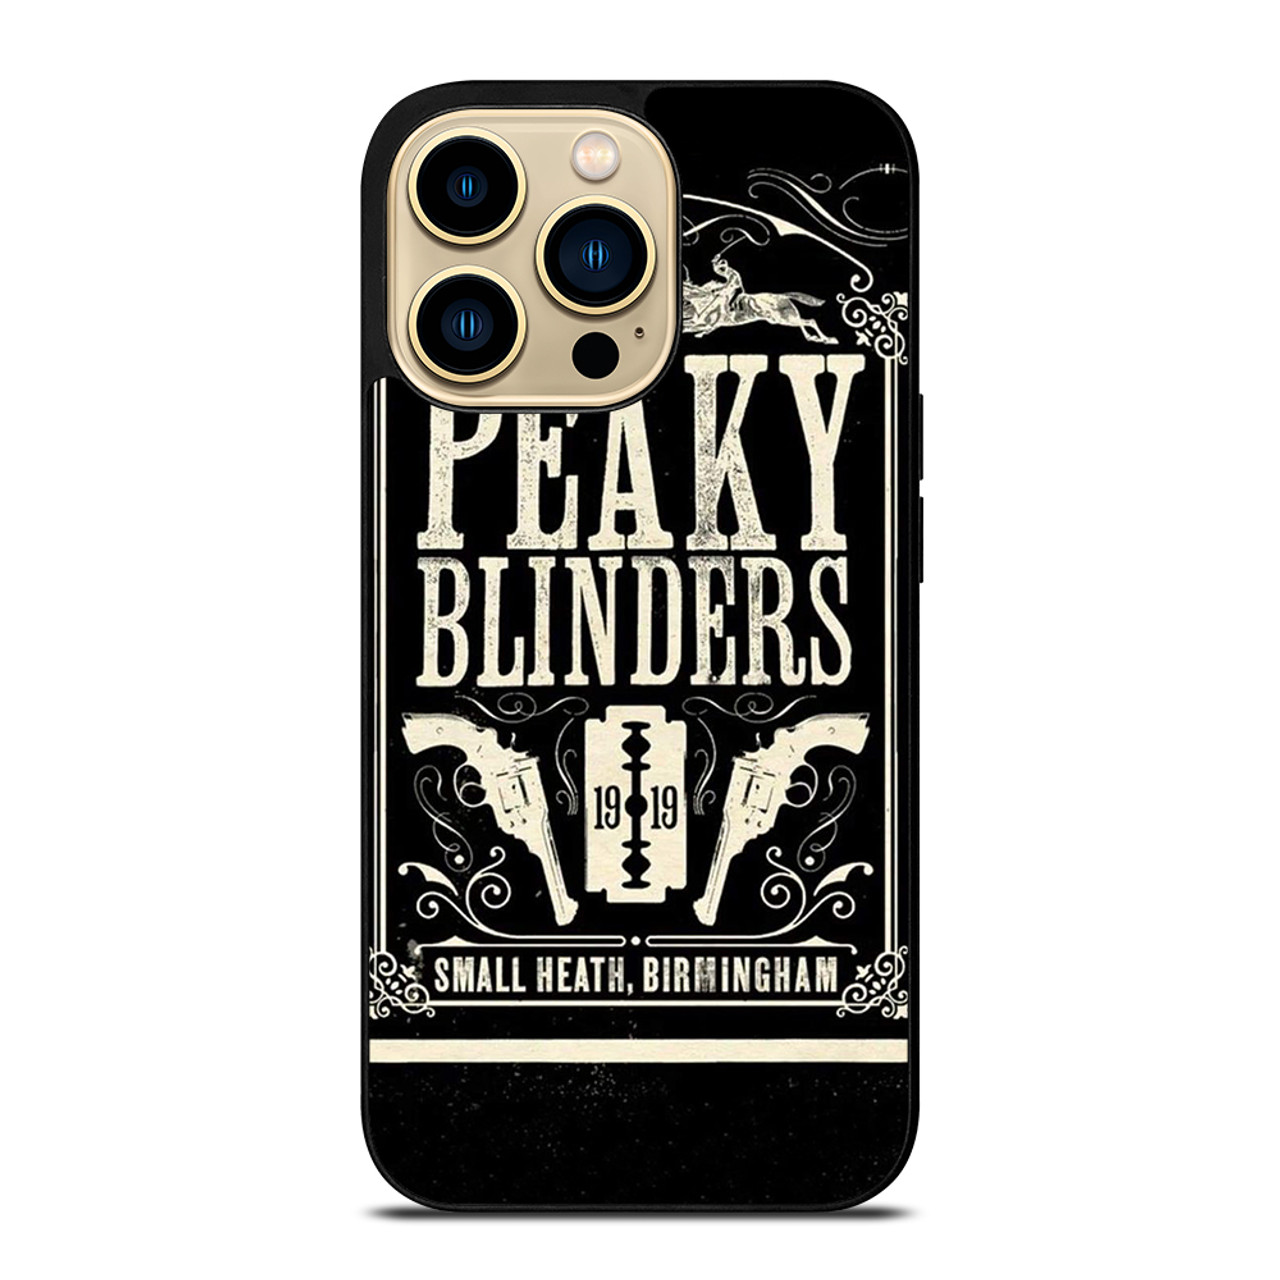 PEAKY BLINDERS 1919 BIRMINGHAM iPhone 14 Pro Max Case Cover